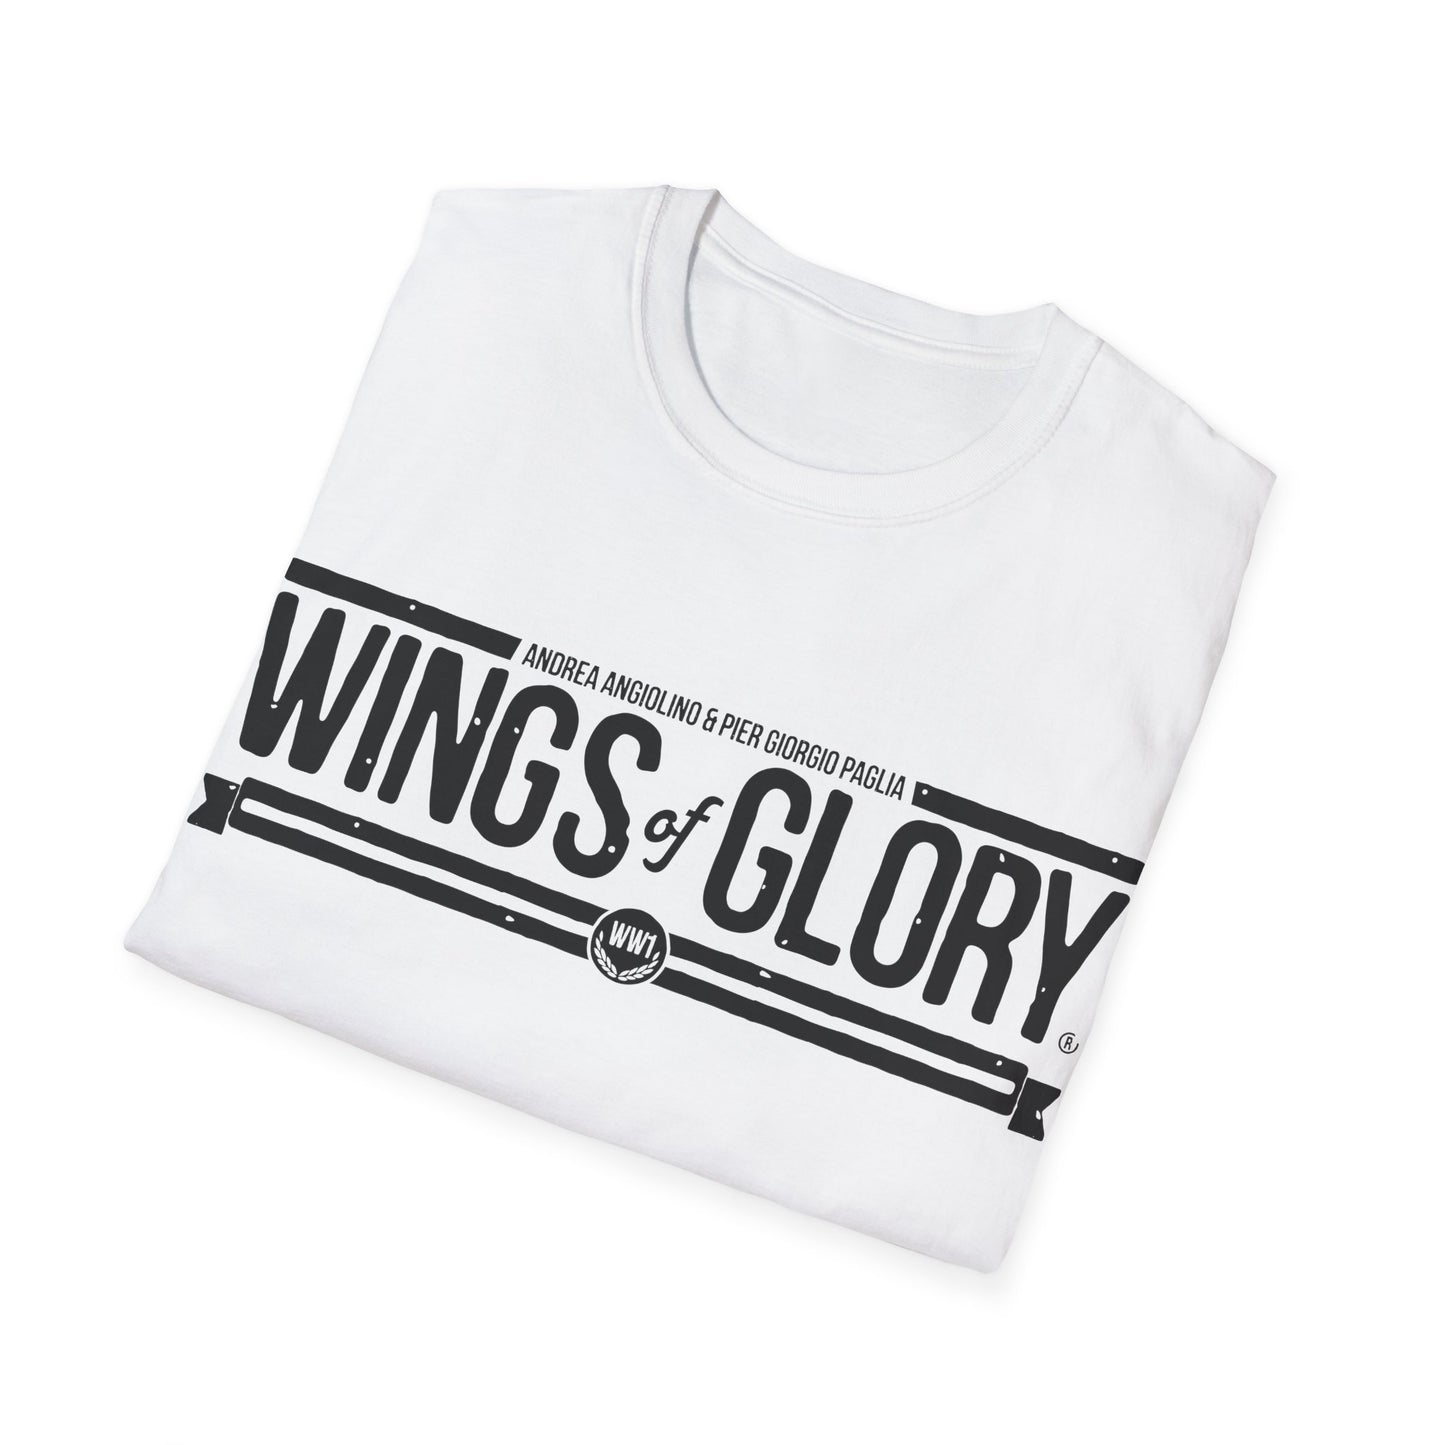 Wings of Glory WW1 Logo Shirt